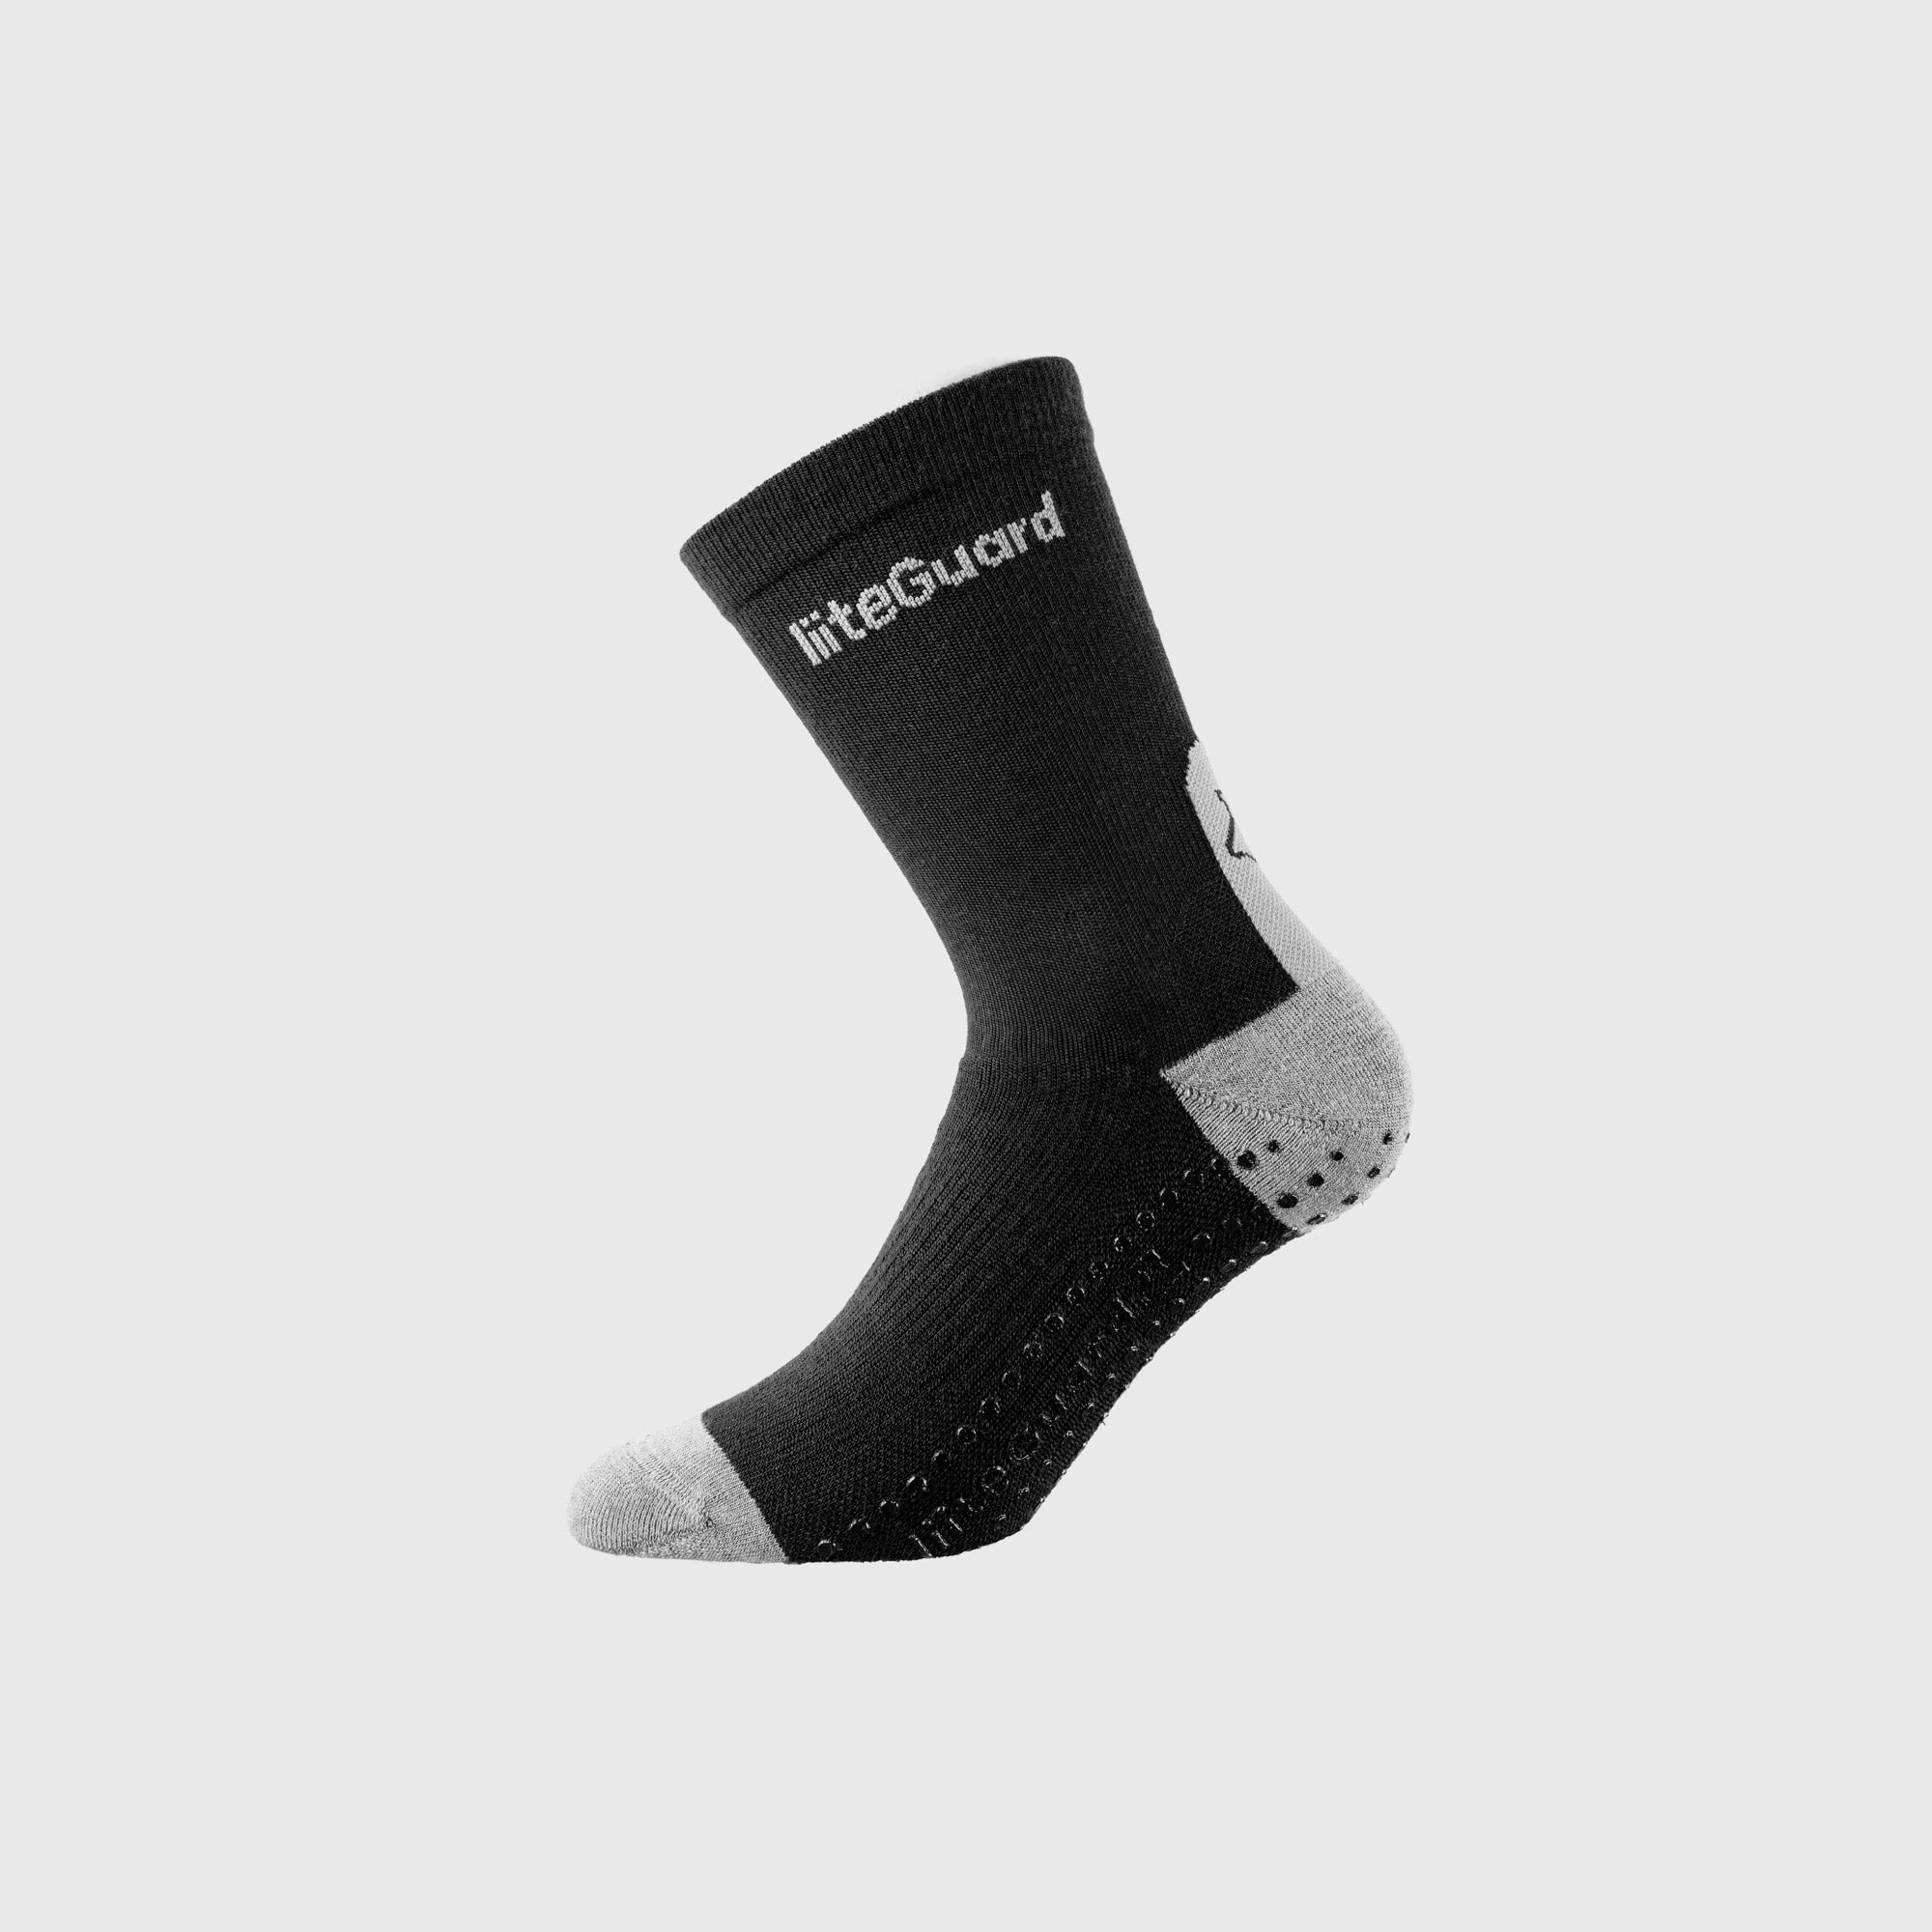 Liiteguard MERINO PRO-TECH SOCK Medium socks BLACK